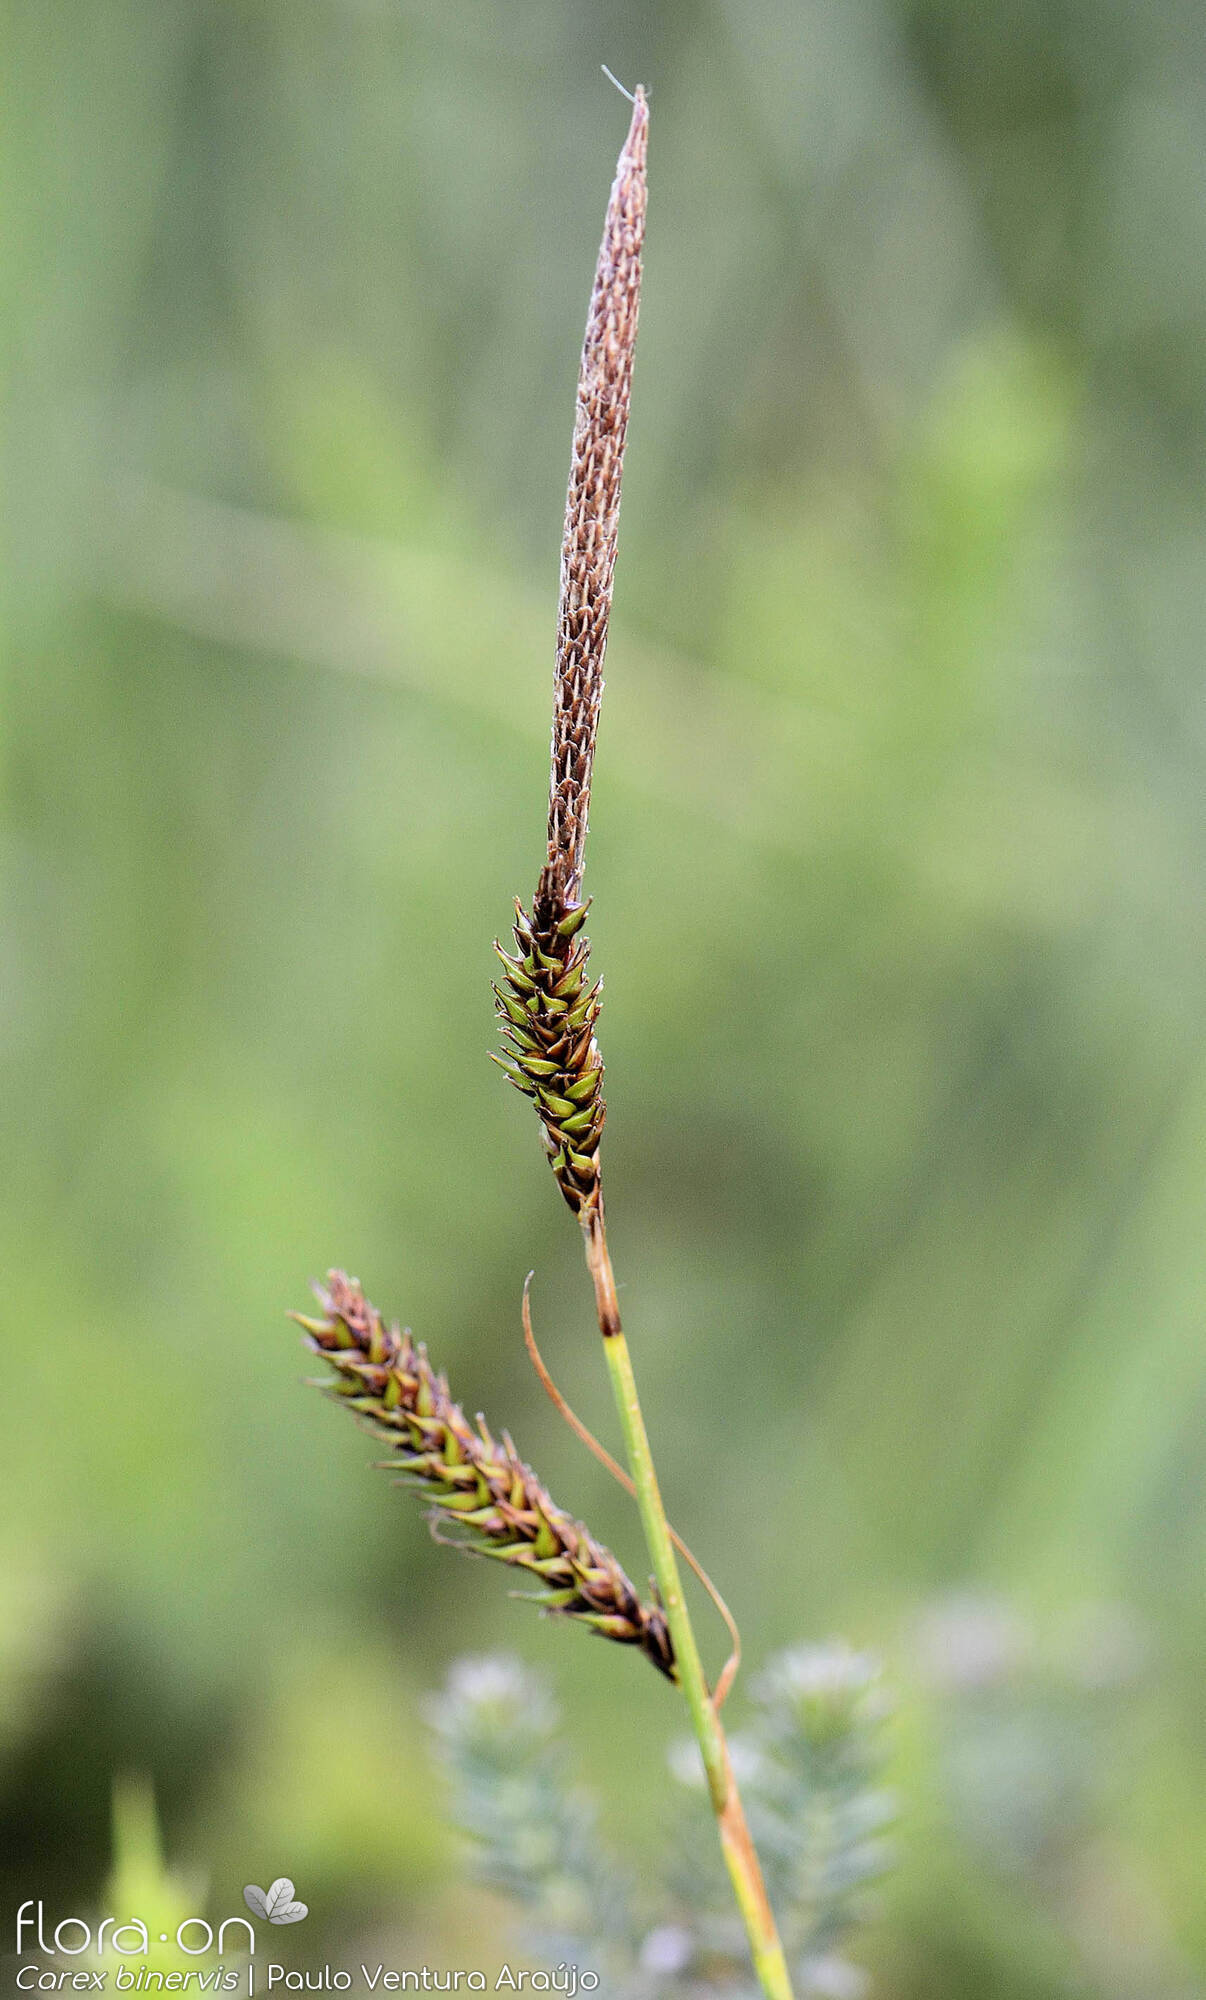 Carex binervis - Flor (geral) | Paulo Ventura Araújo; CC BY-NC 4.0